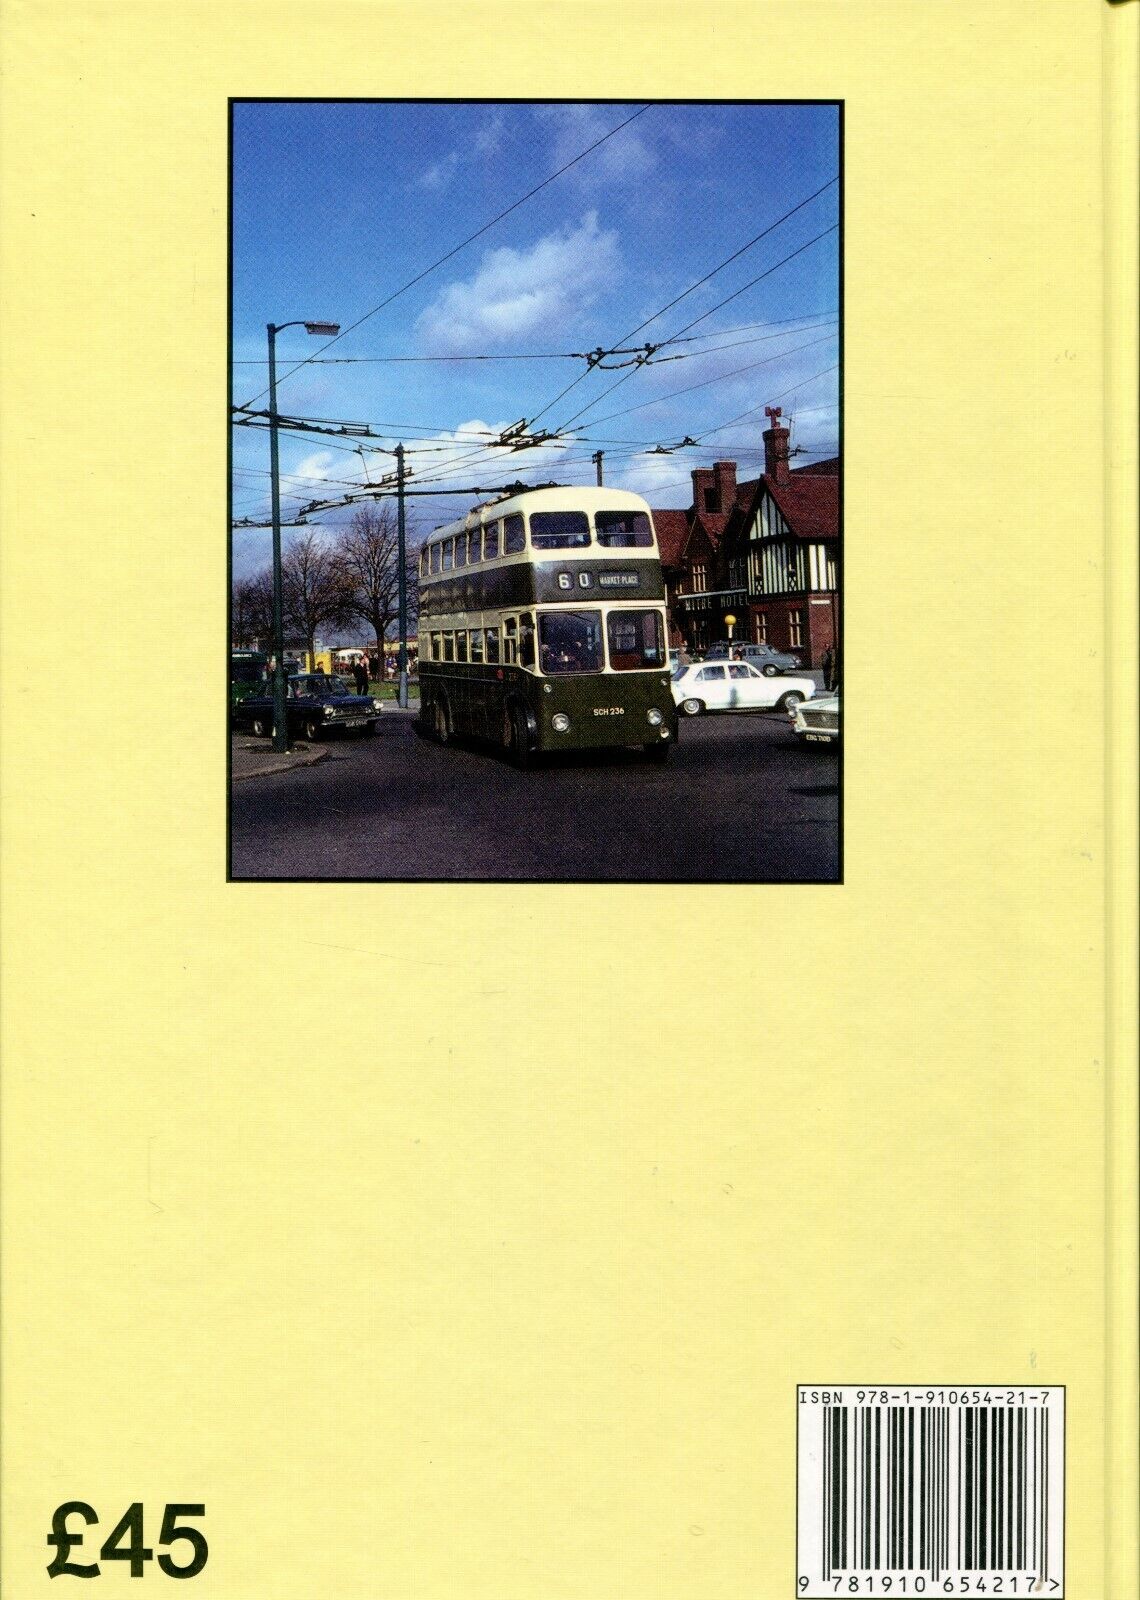 Around Derby by Trolleybus